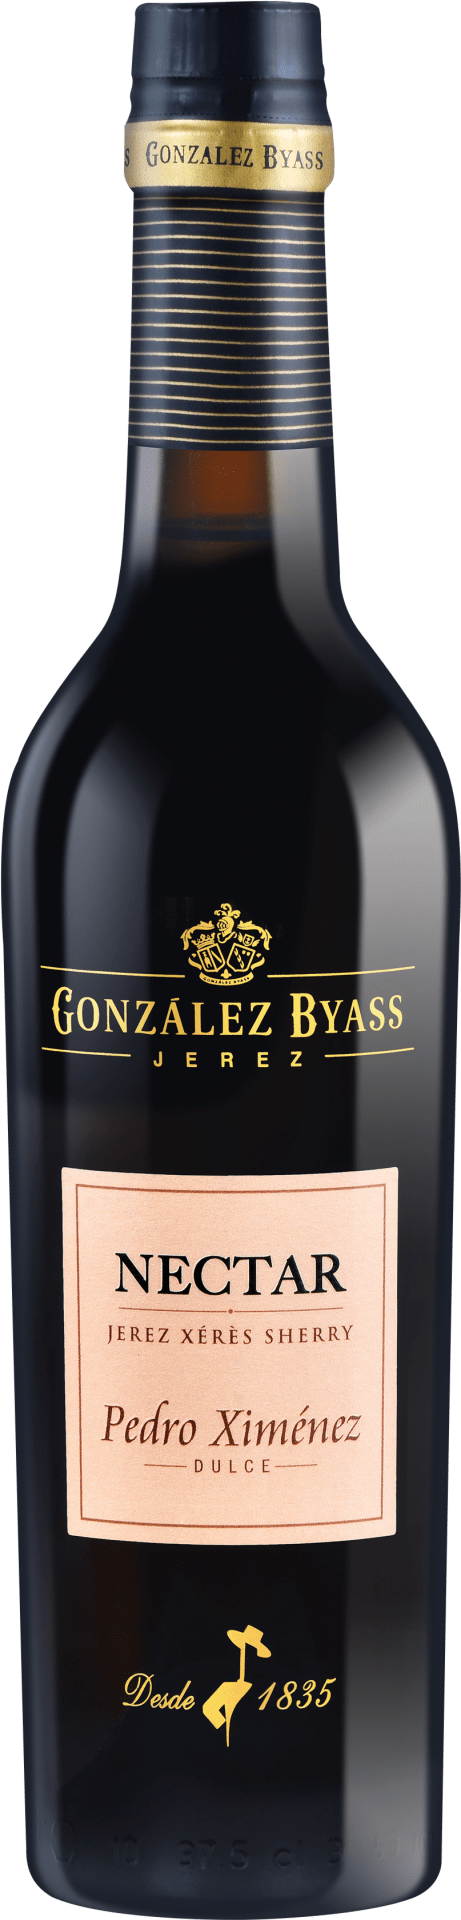 Gonzalez Byass Nectar 